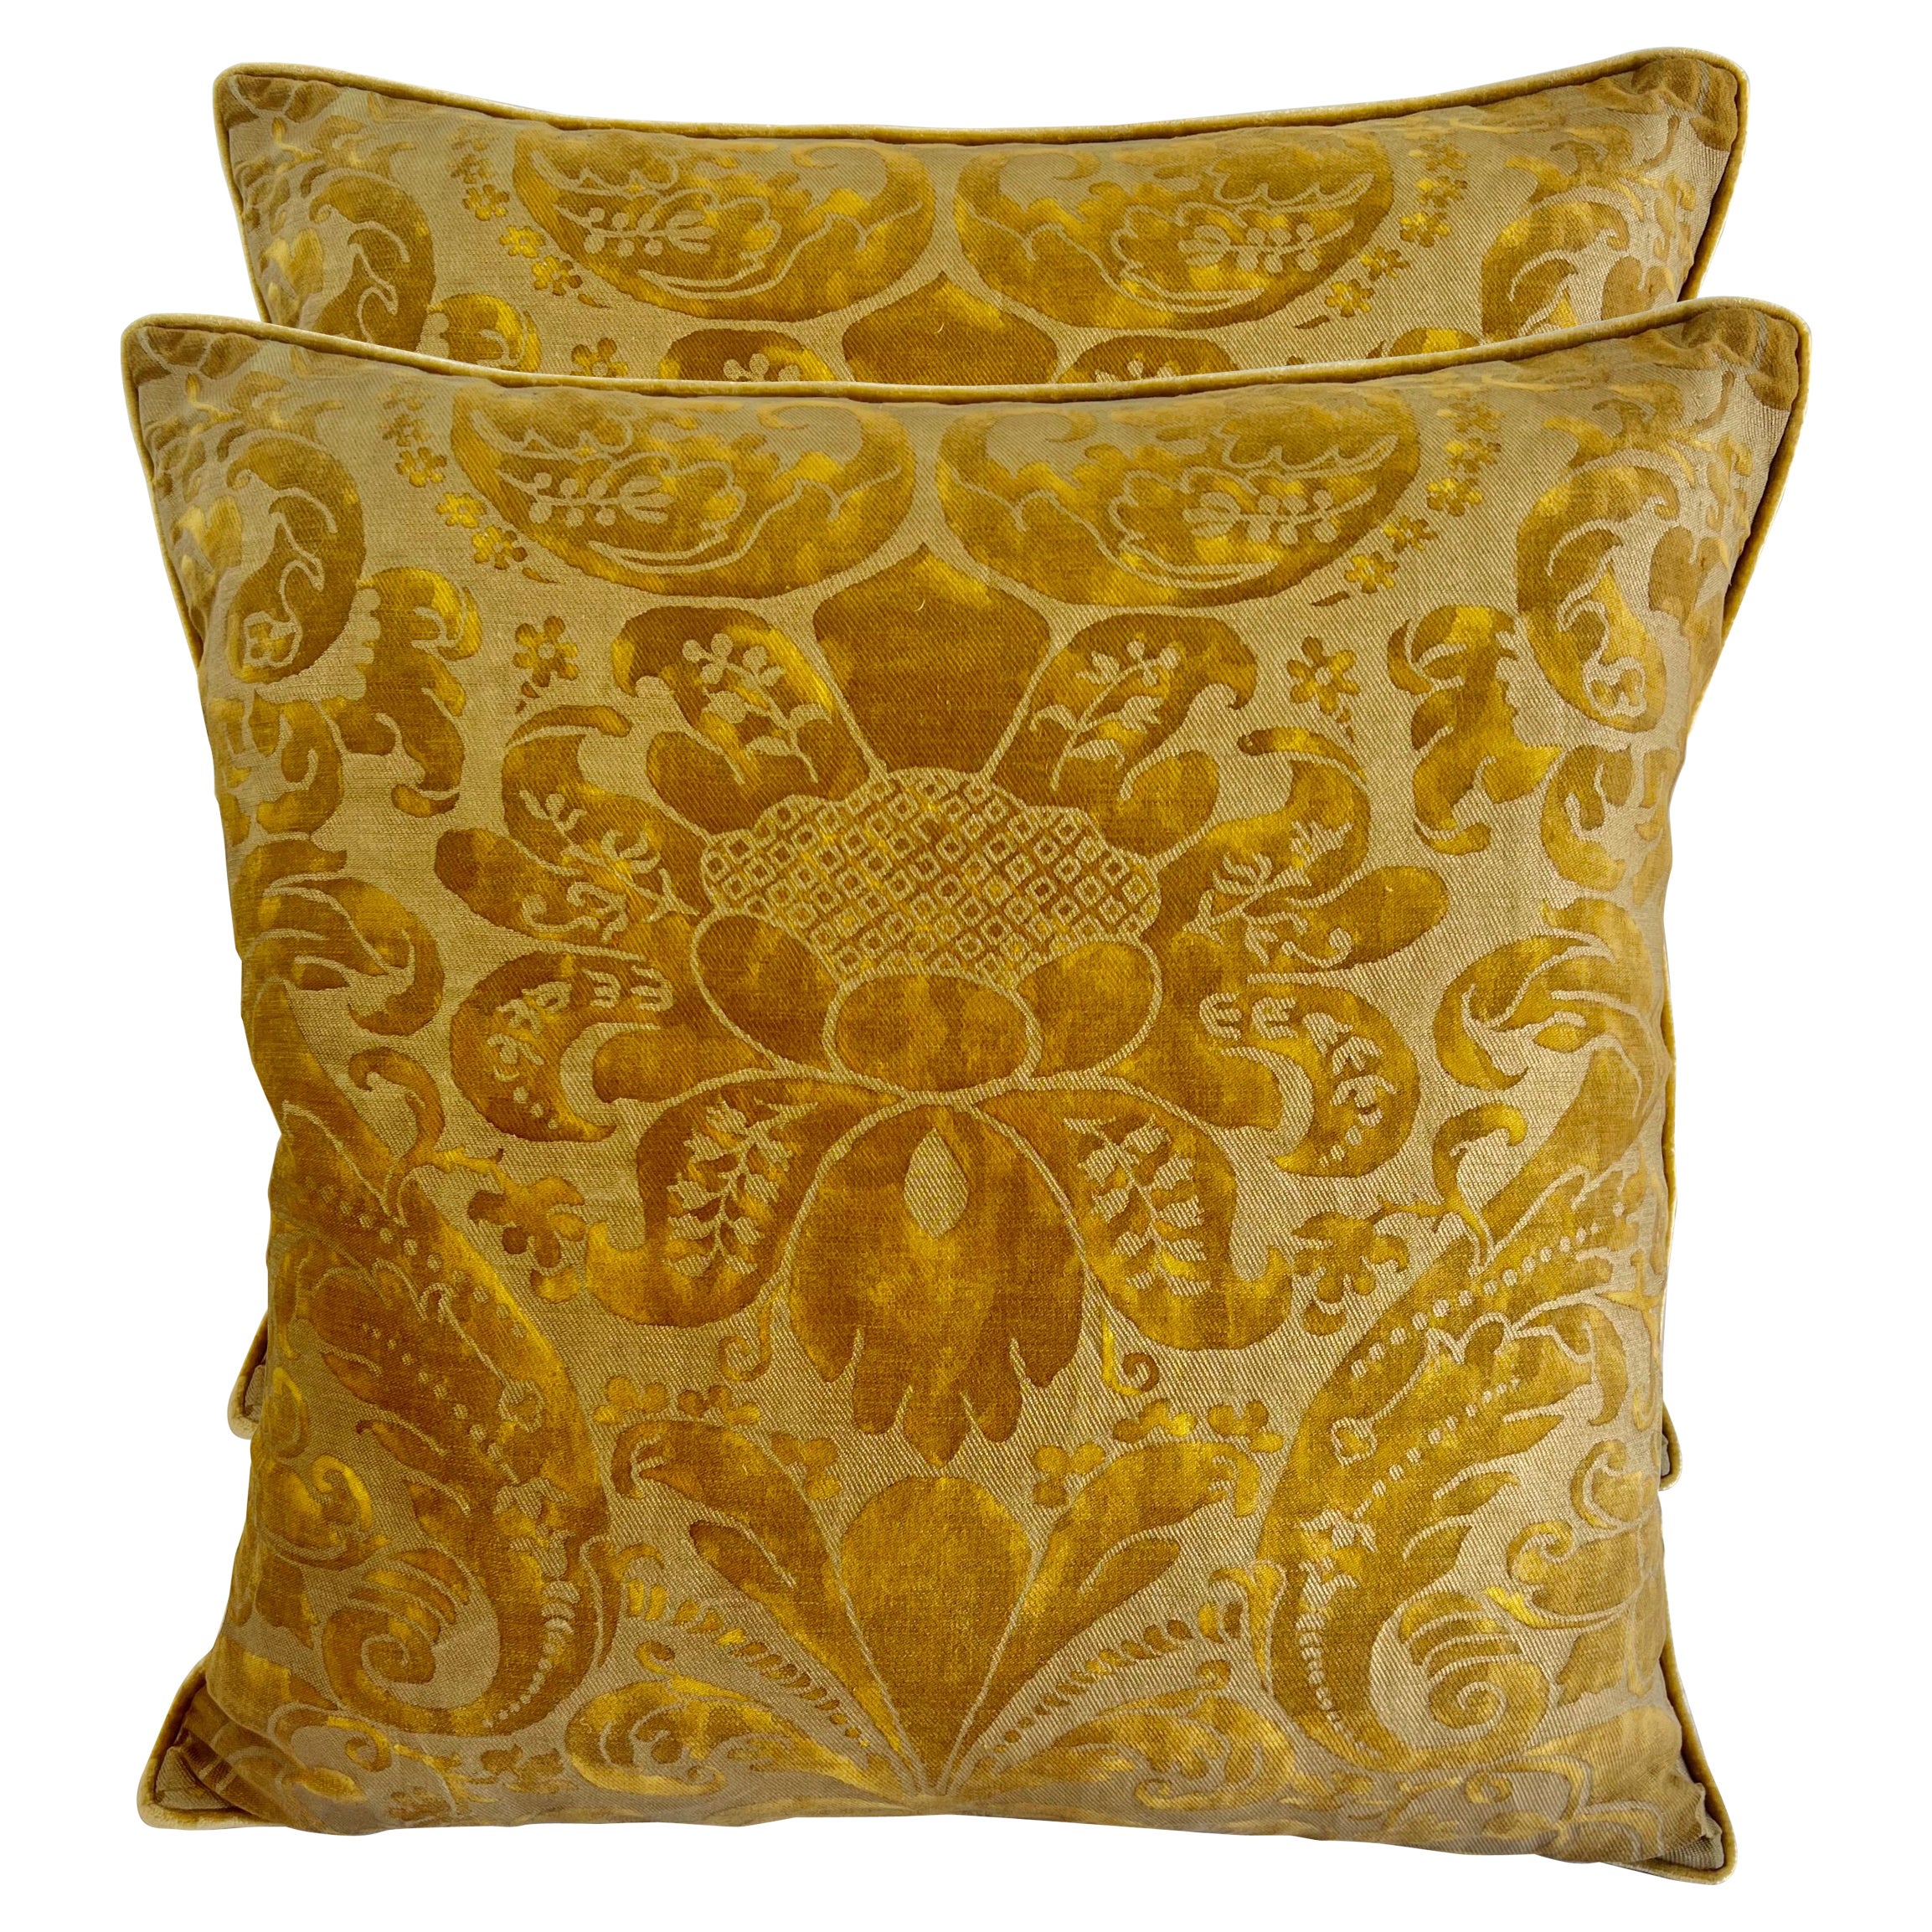 Pair of Custom Golden Fortuny Pillows